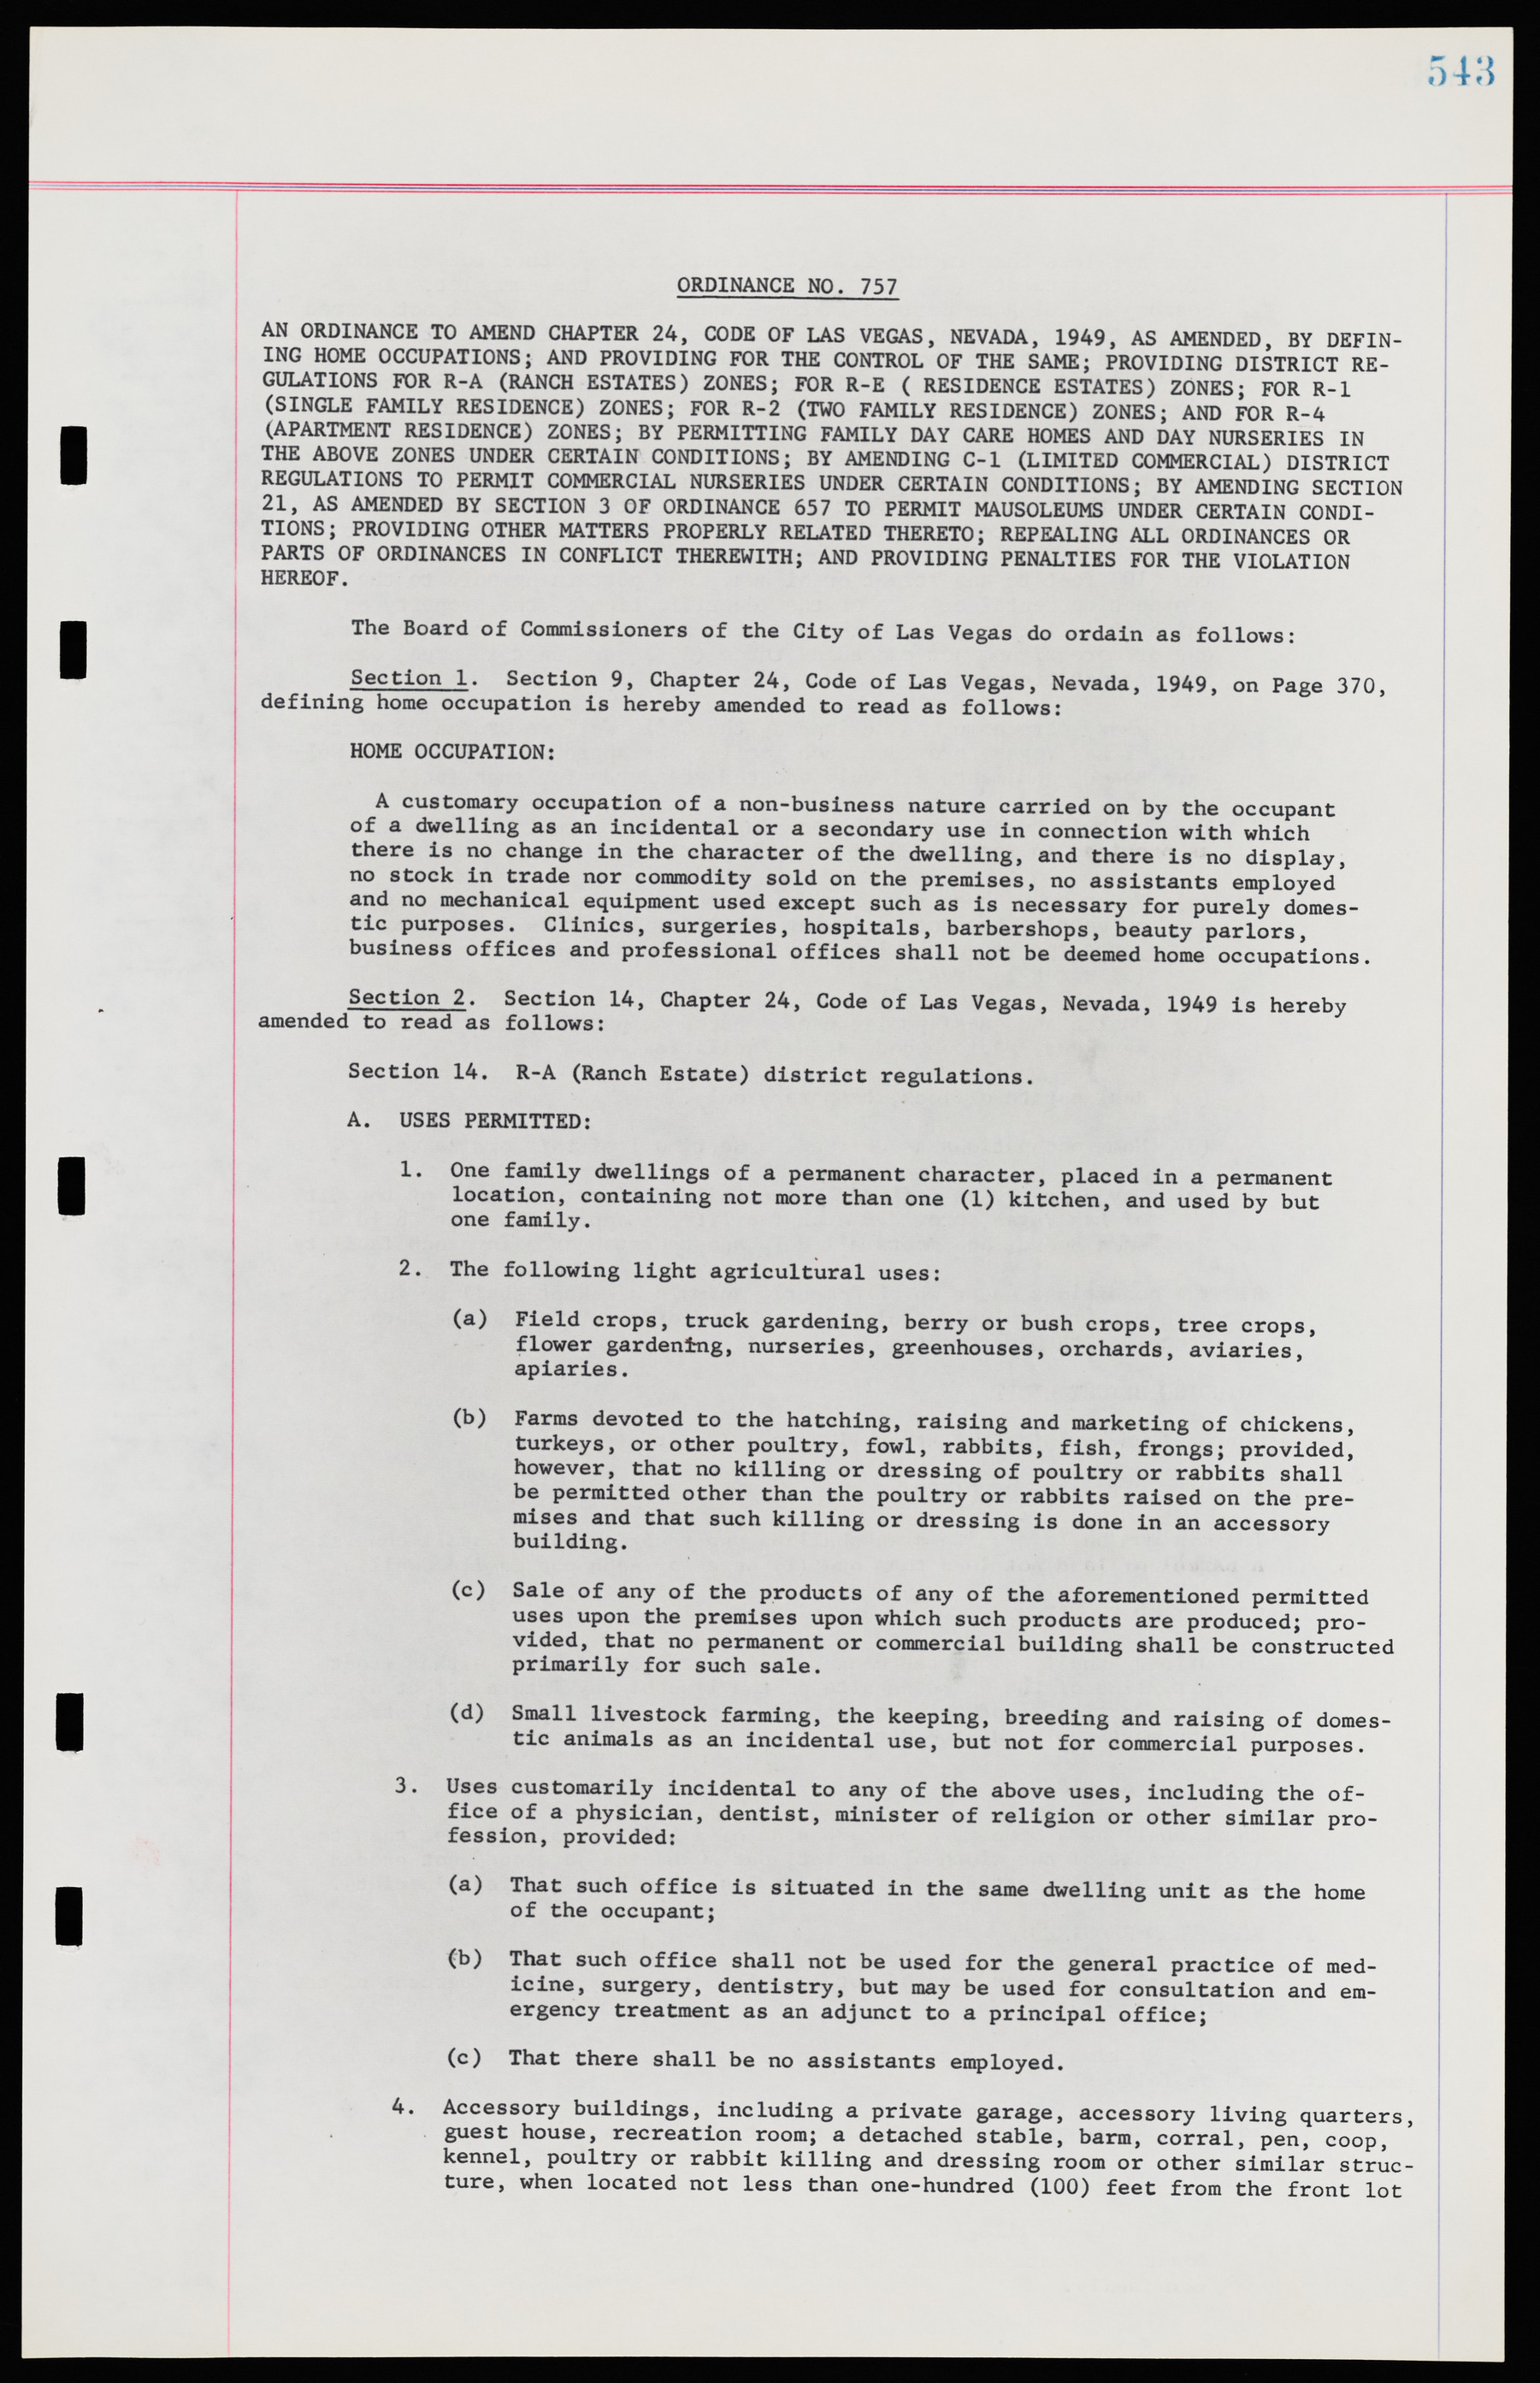 Las Vegas City Ordinances, November 13, 1950 to August 6, 1958, lvc000015-551